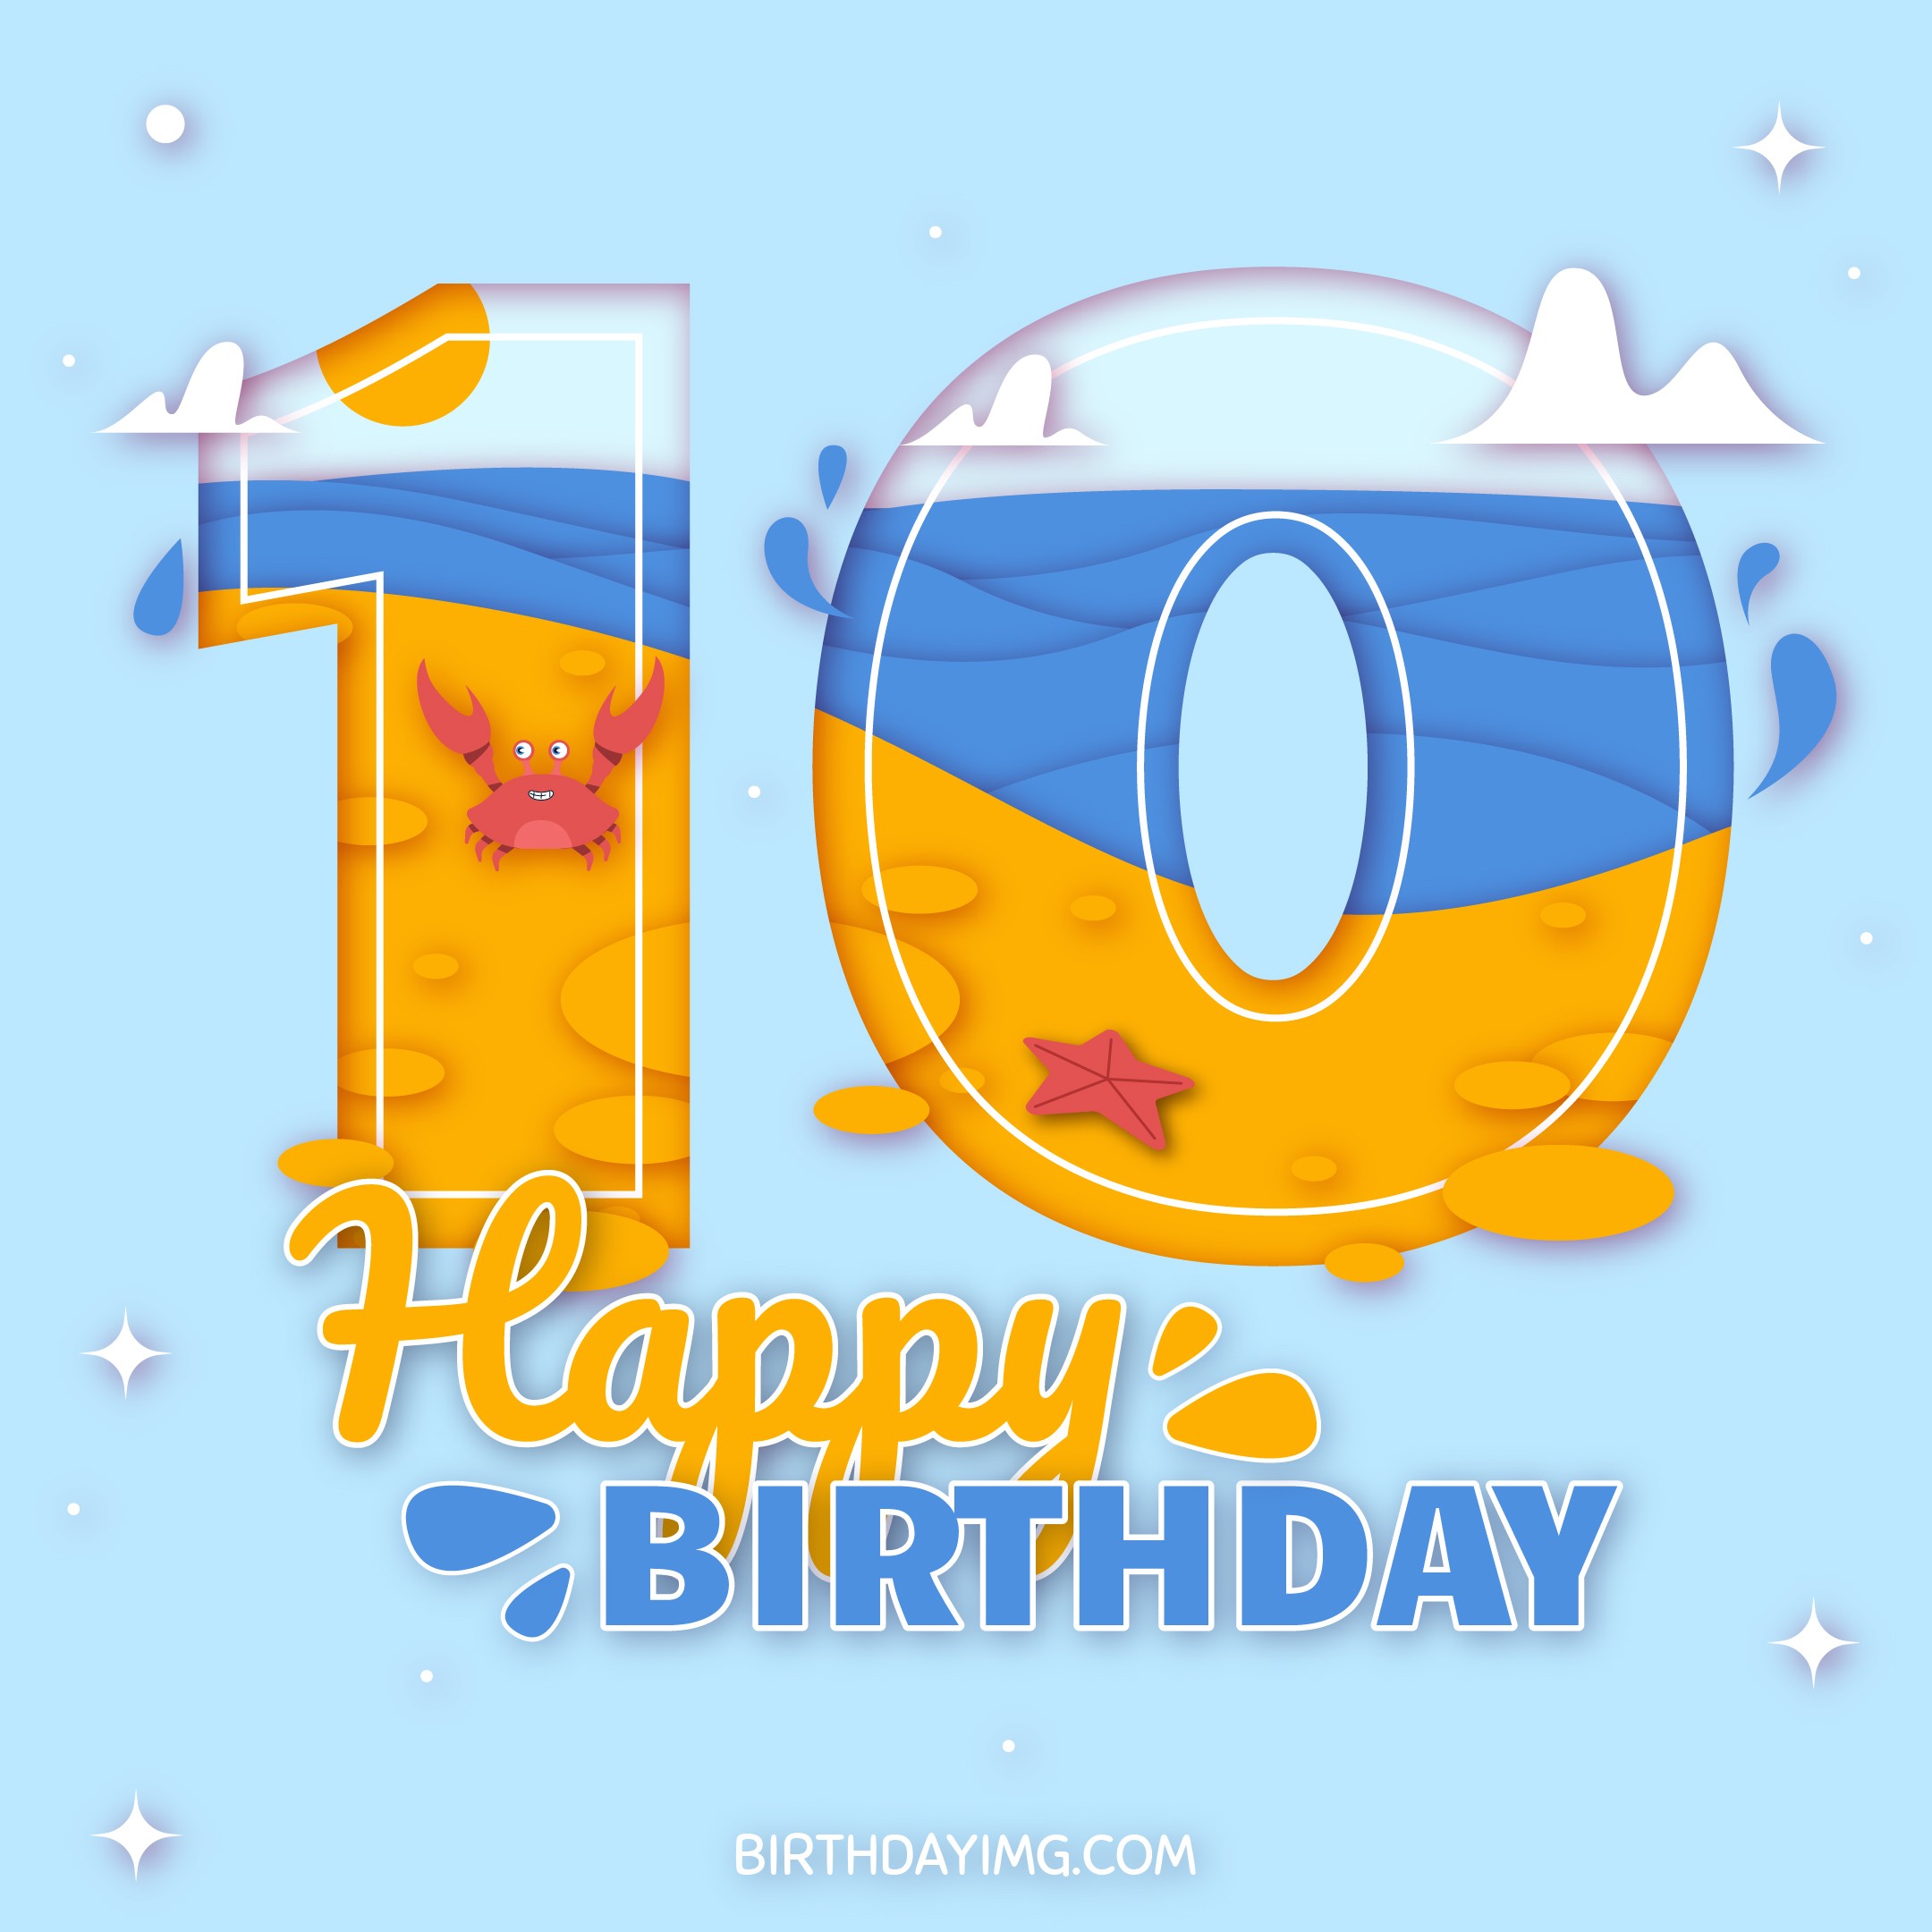 Free 10th Years Happy Birthday Image with Beach and Sea - birthdayimg.com